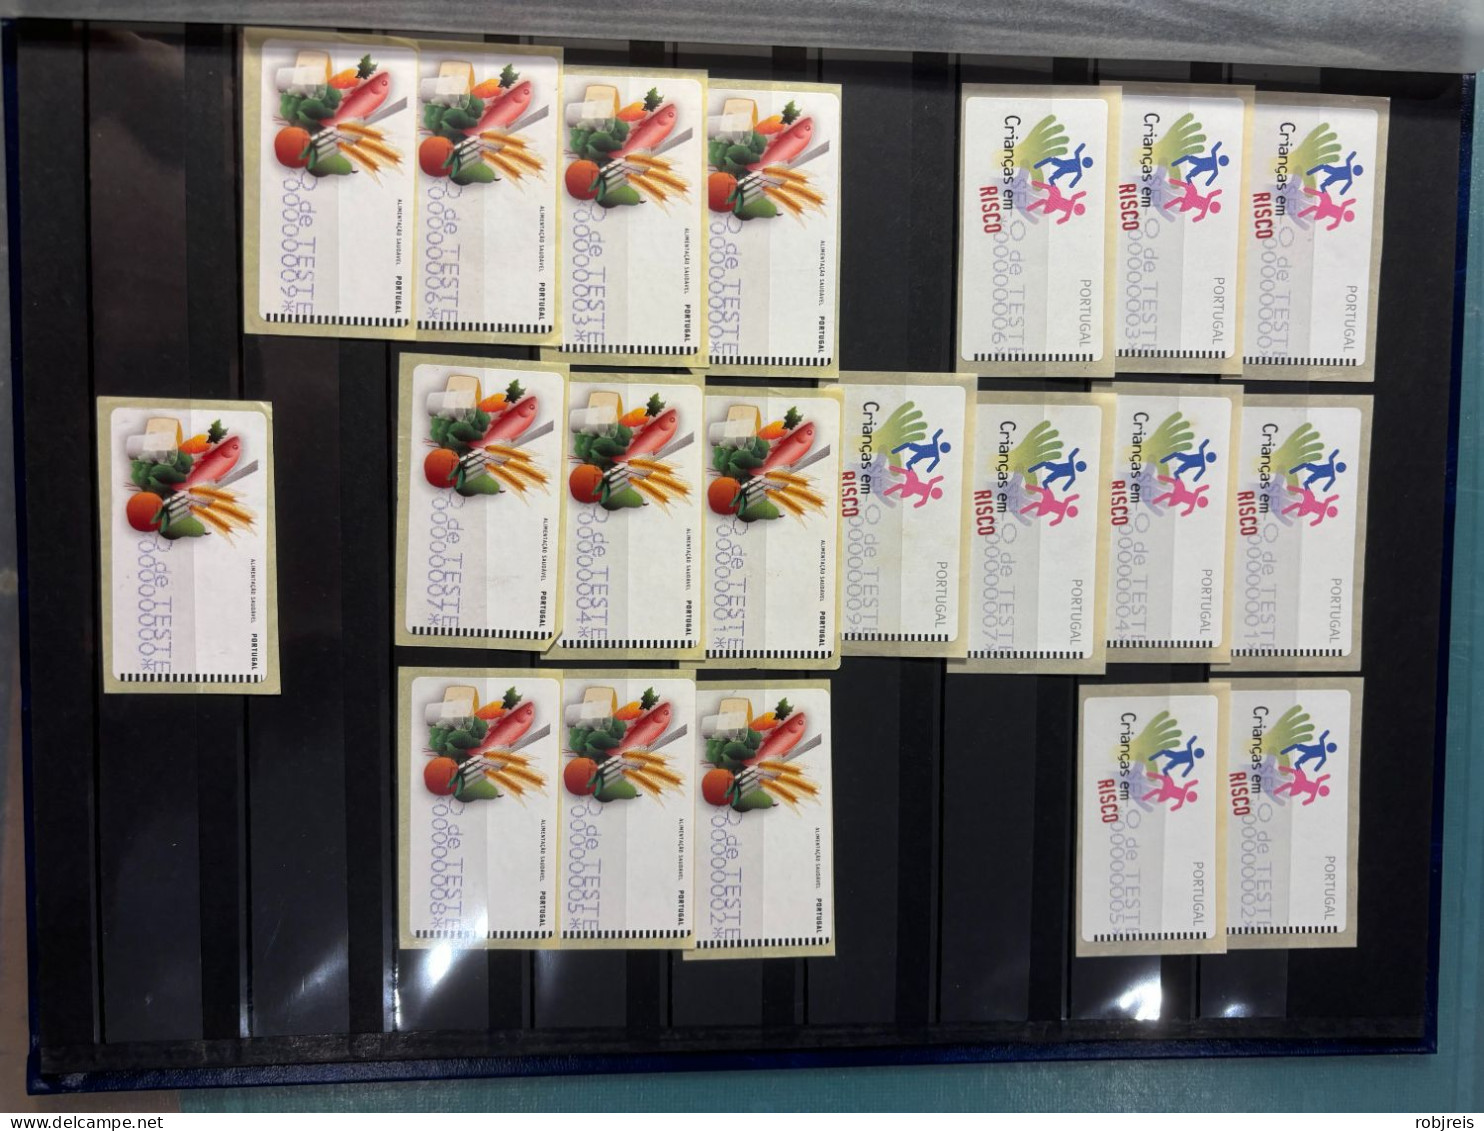 325 Very Scarce Label stamps Testing machine - duplicates stockbook